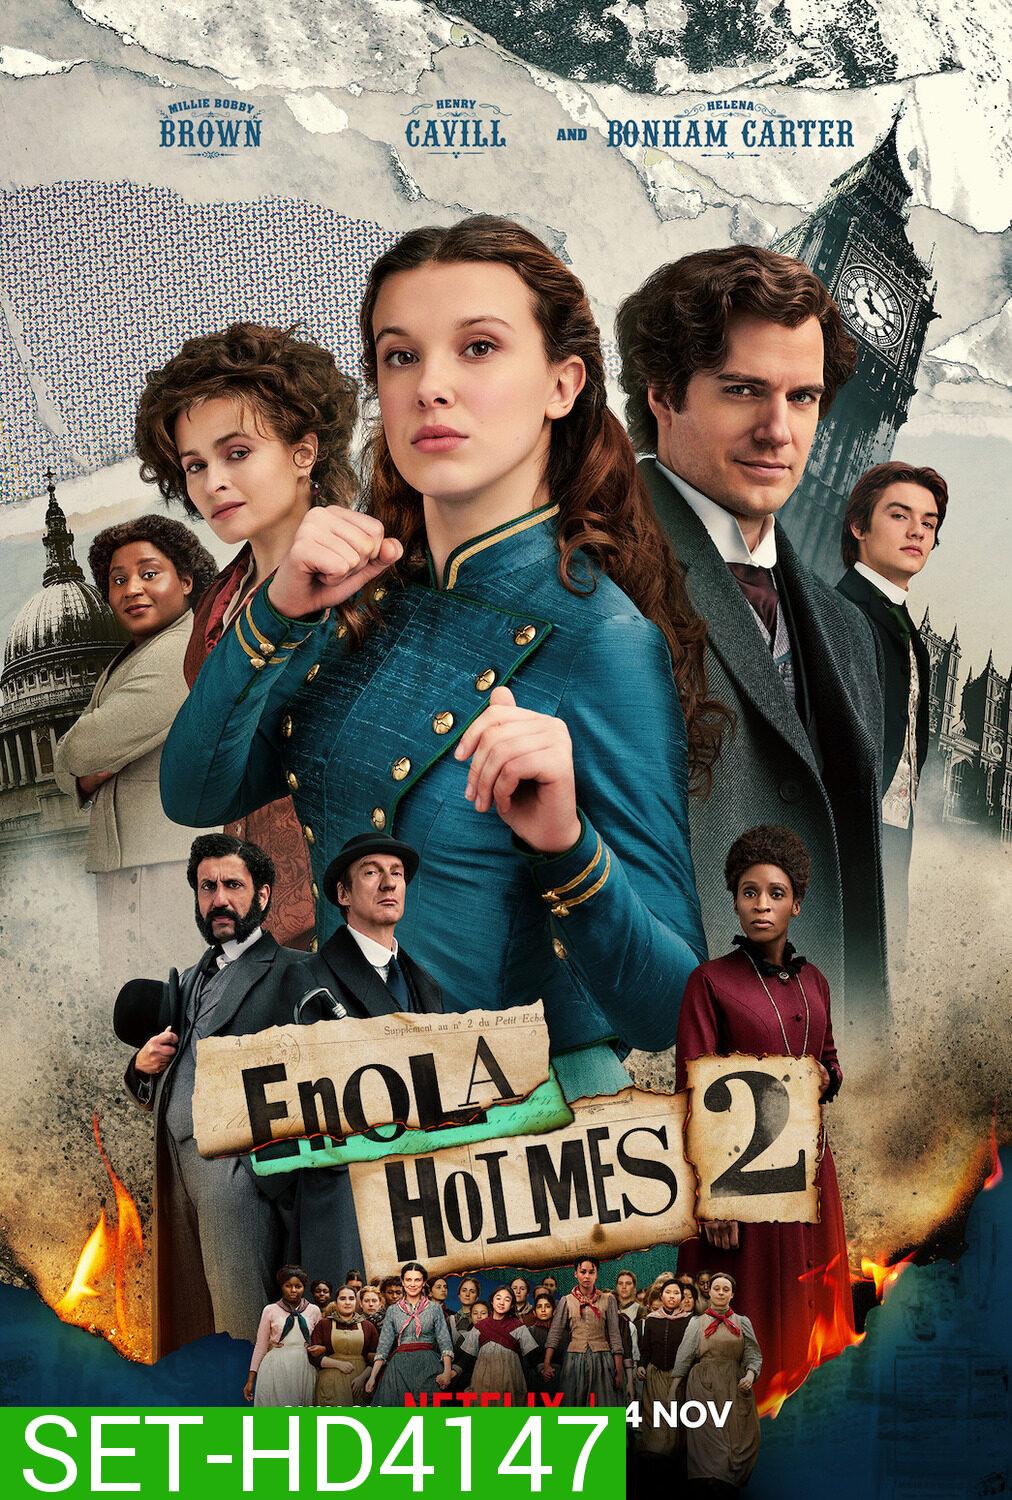 Enola Holmes เอโนลา โฮล์มส์ (2020-2022) DVD หนัง มาสเตอร์ พากย์ไทย